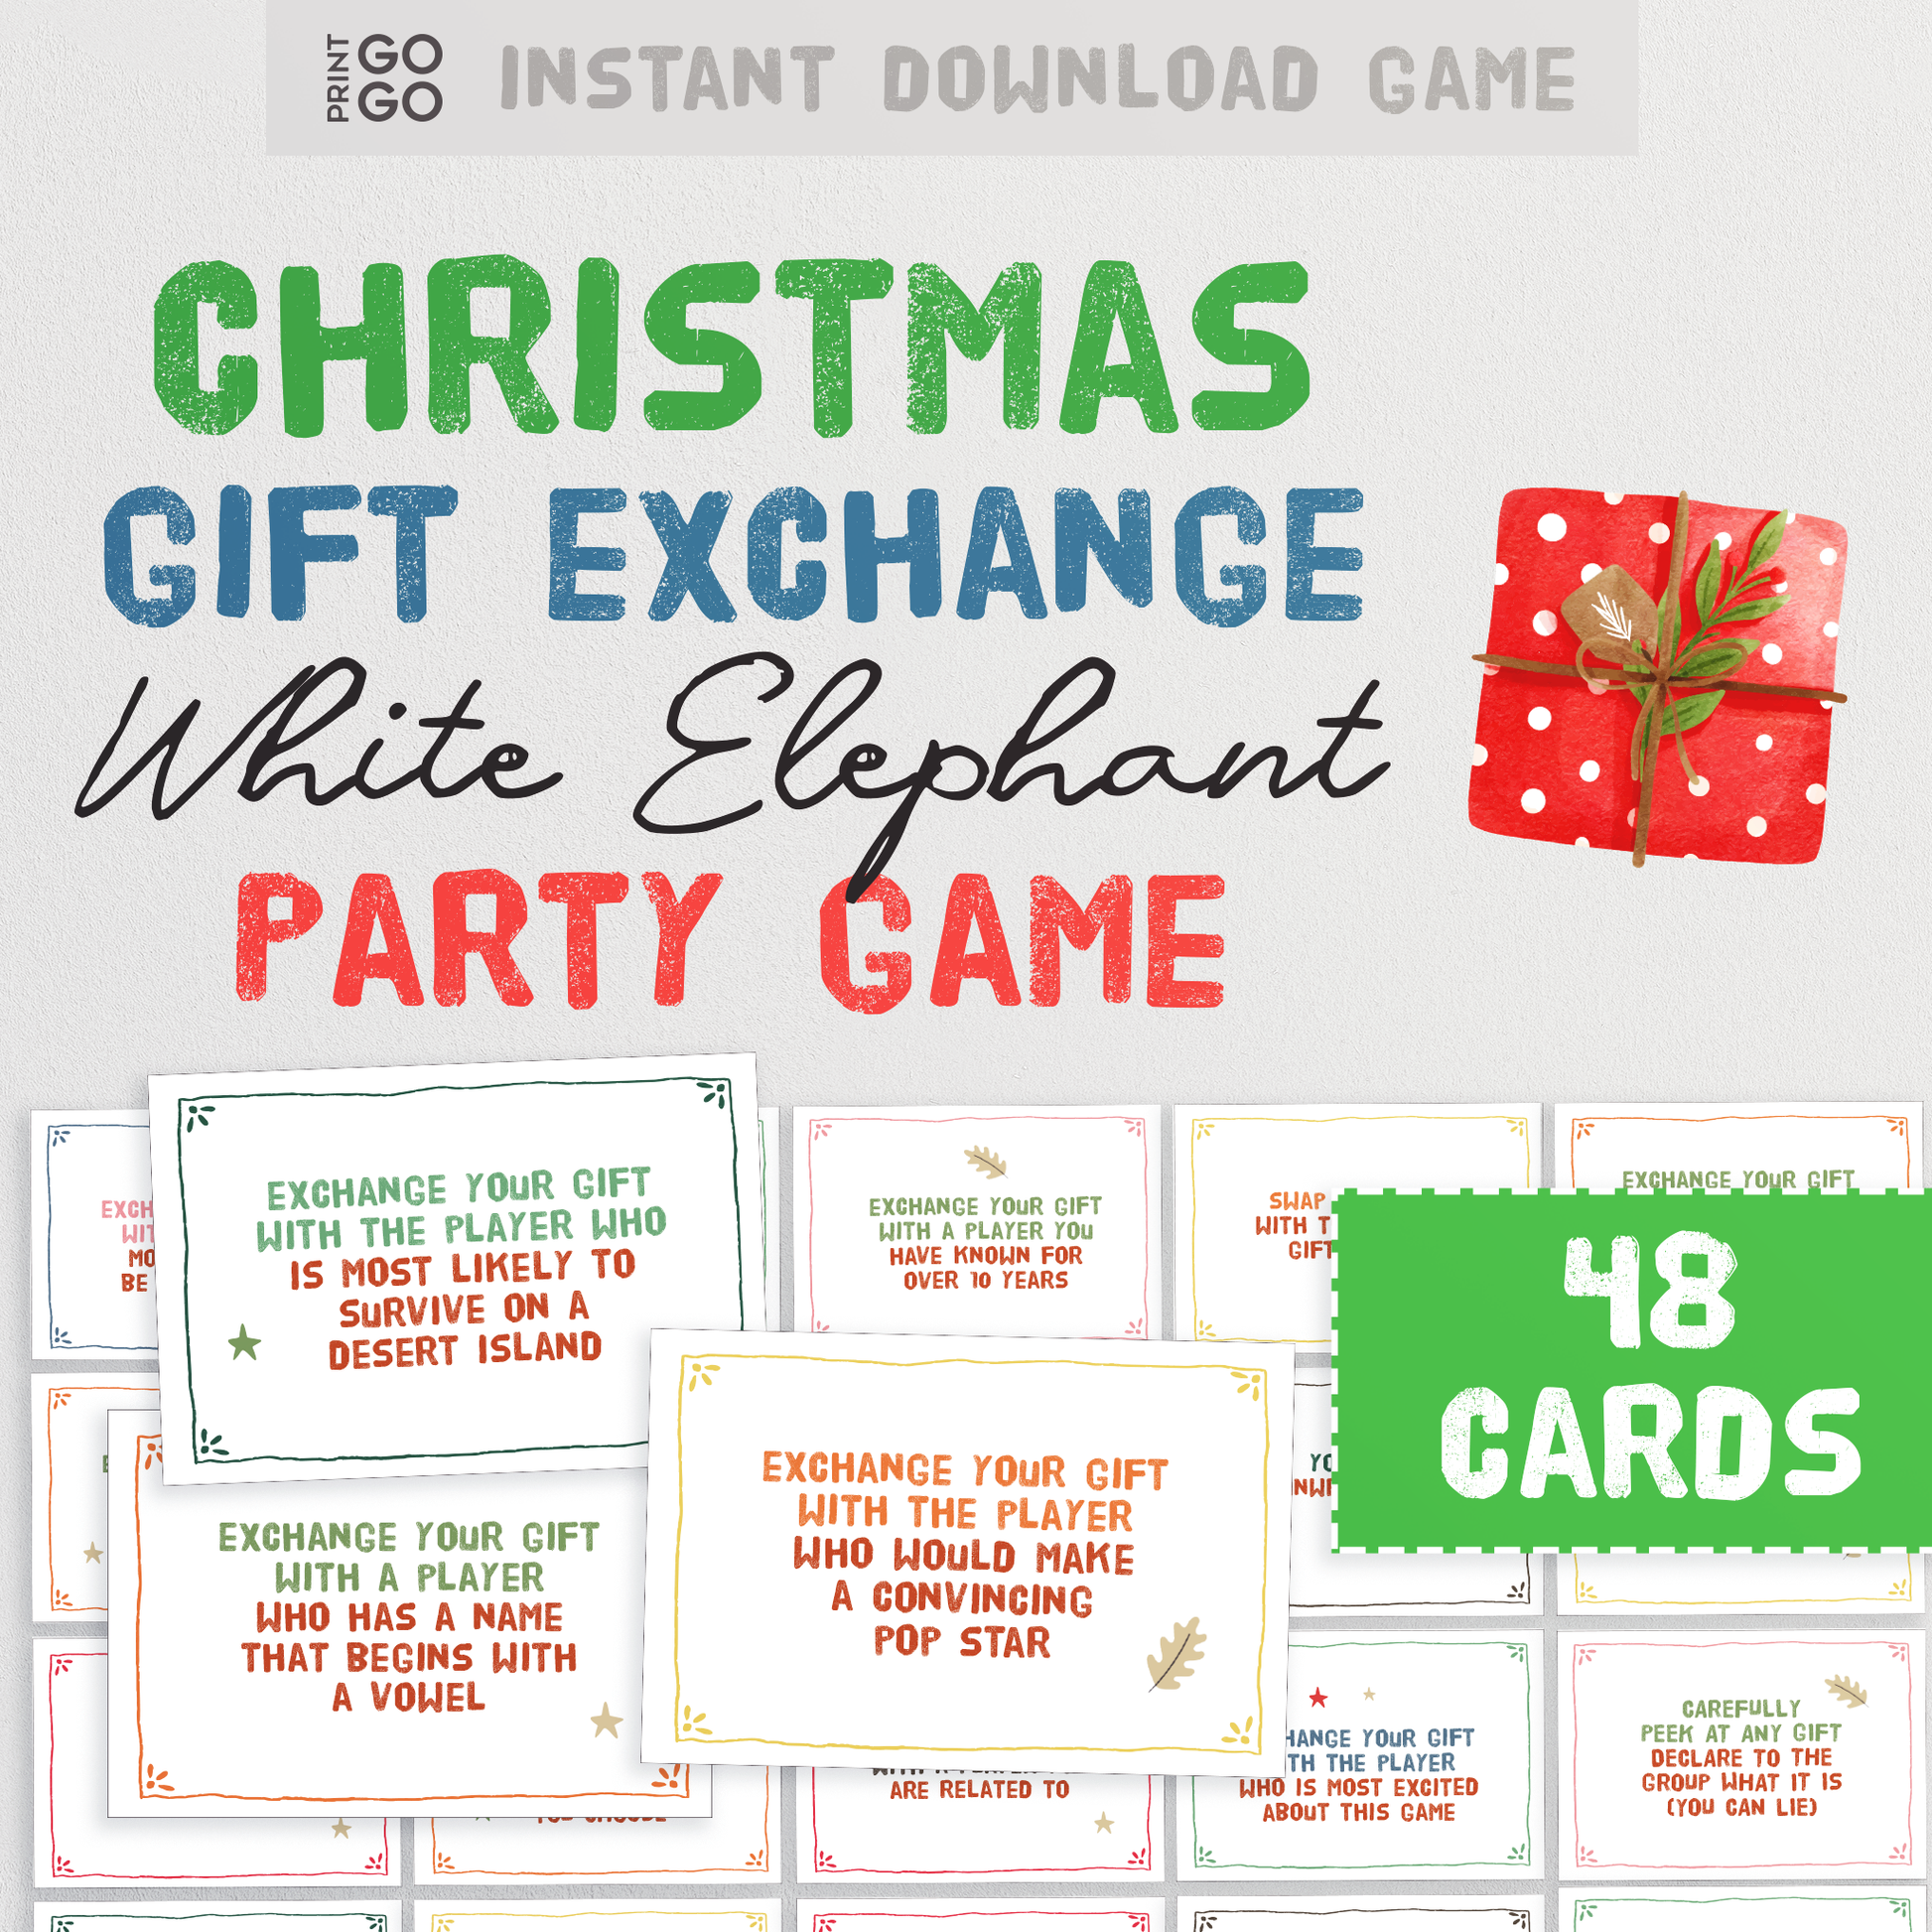 Gift Exchange Party Game - The Hilarious White Elephant Group Game! – Print  GoGo